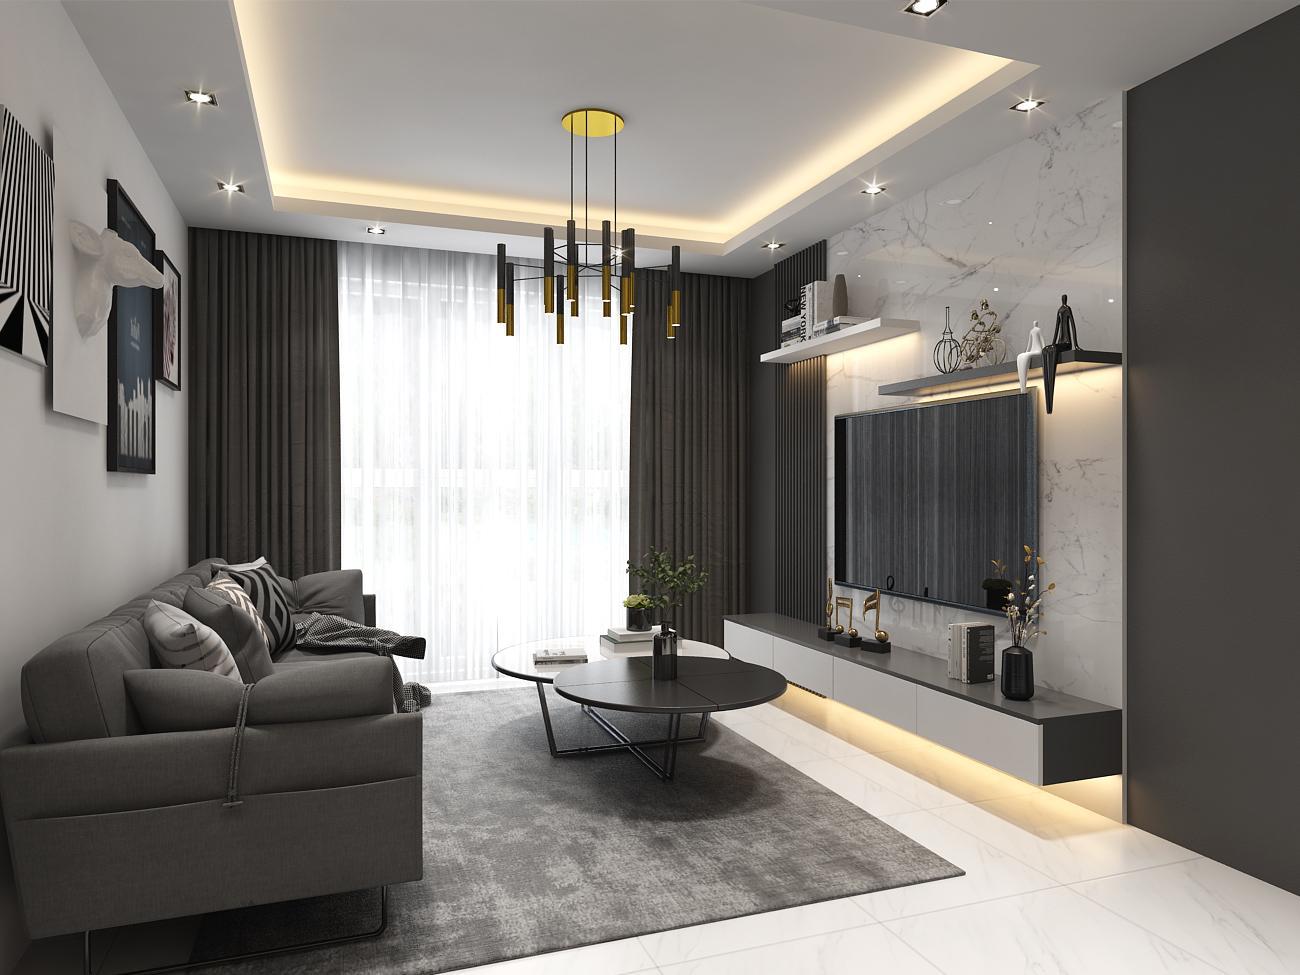 renovation idea modern contemporary black and white living room